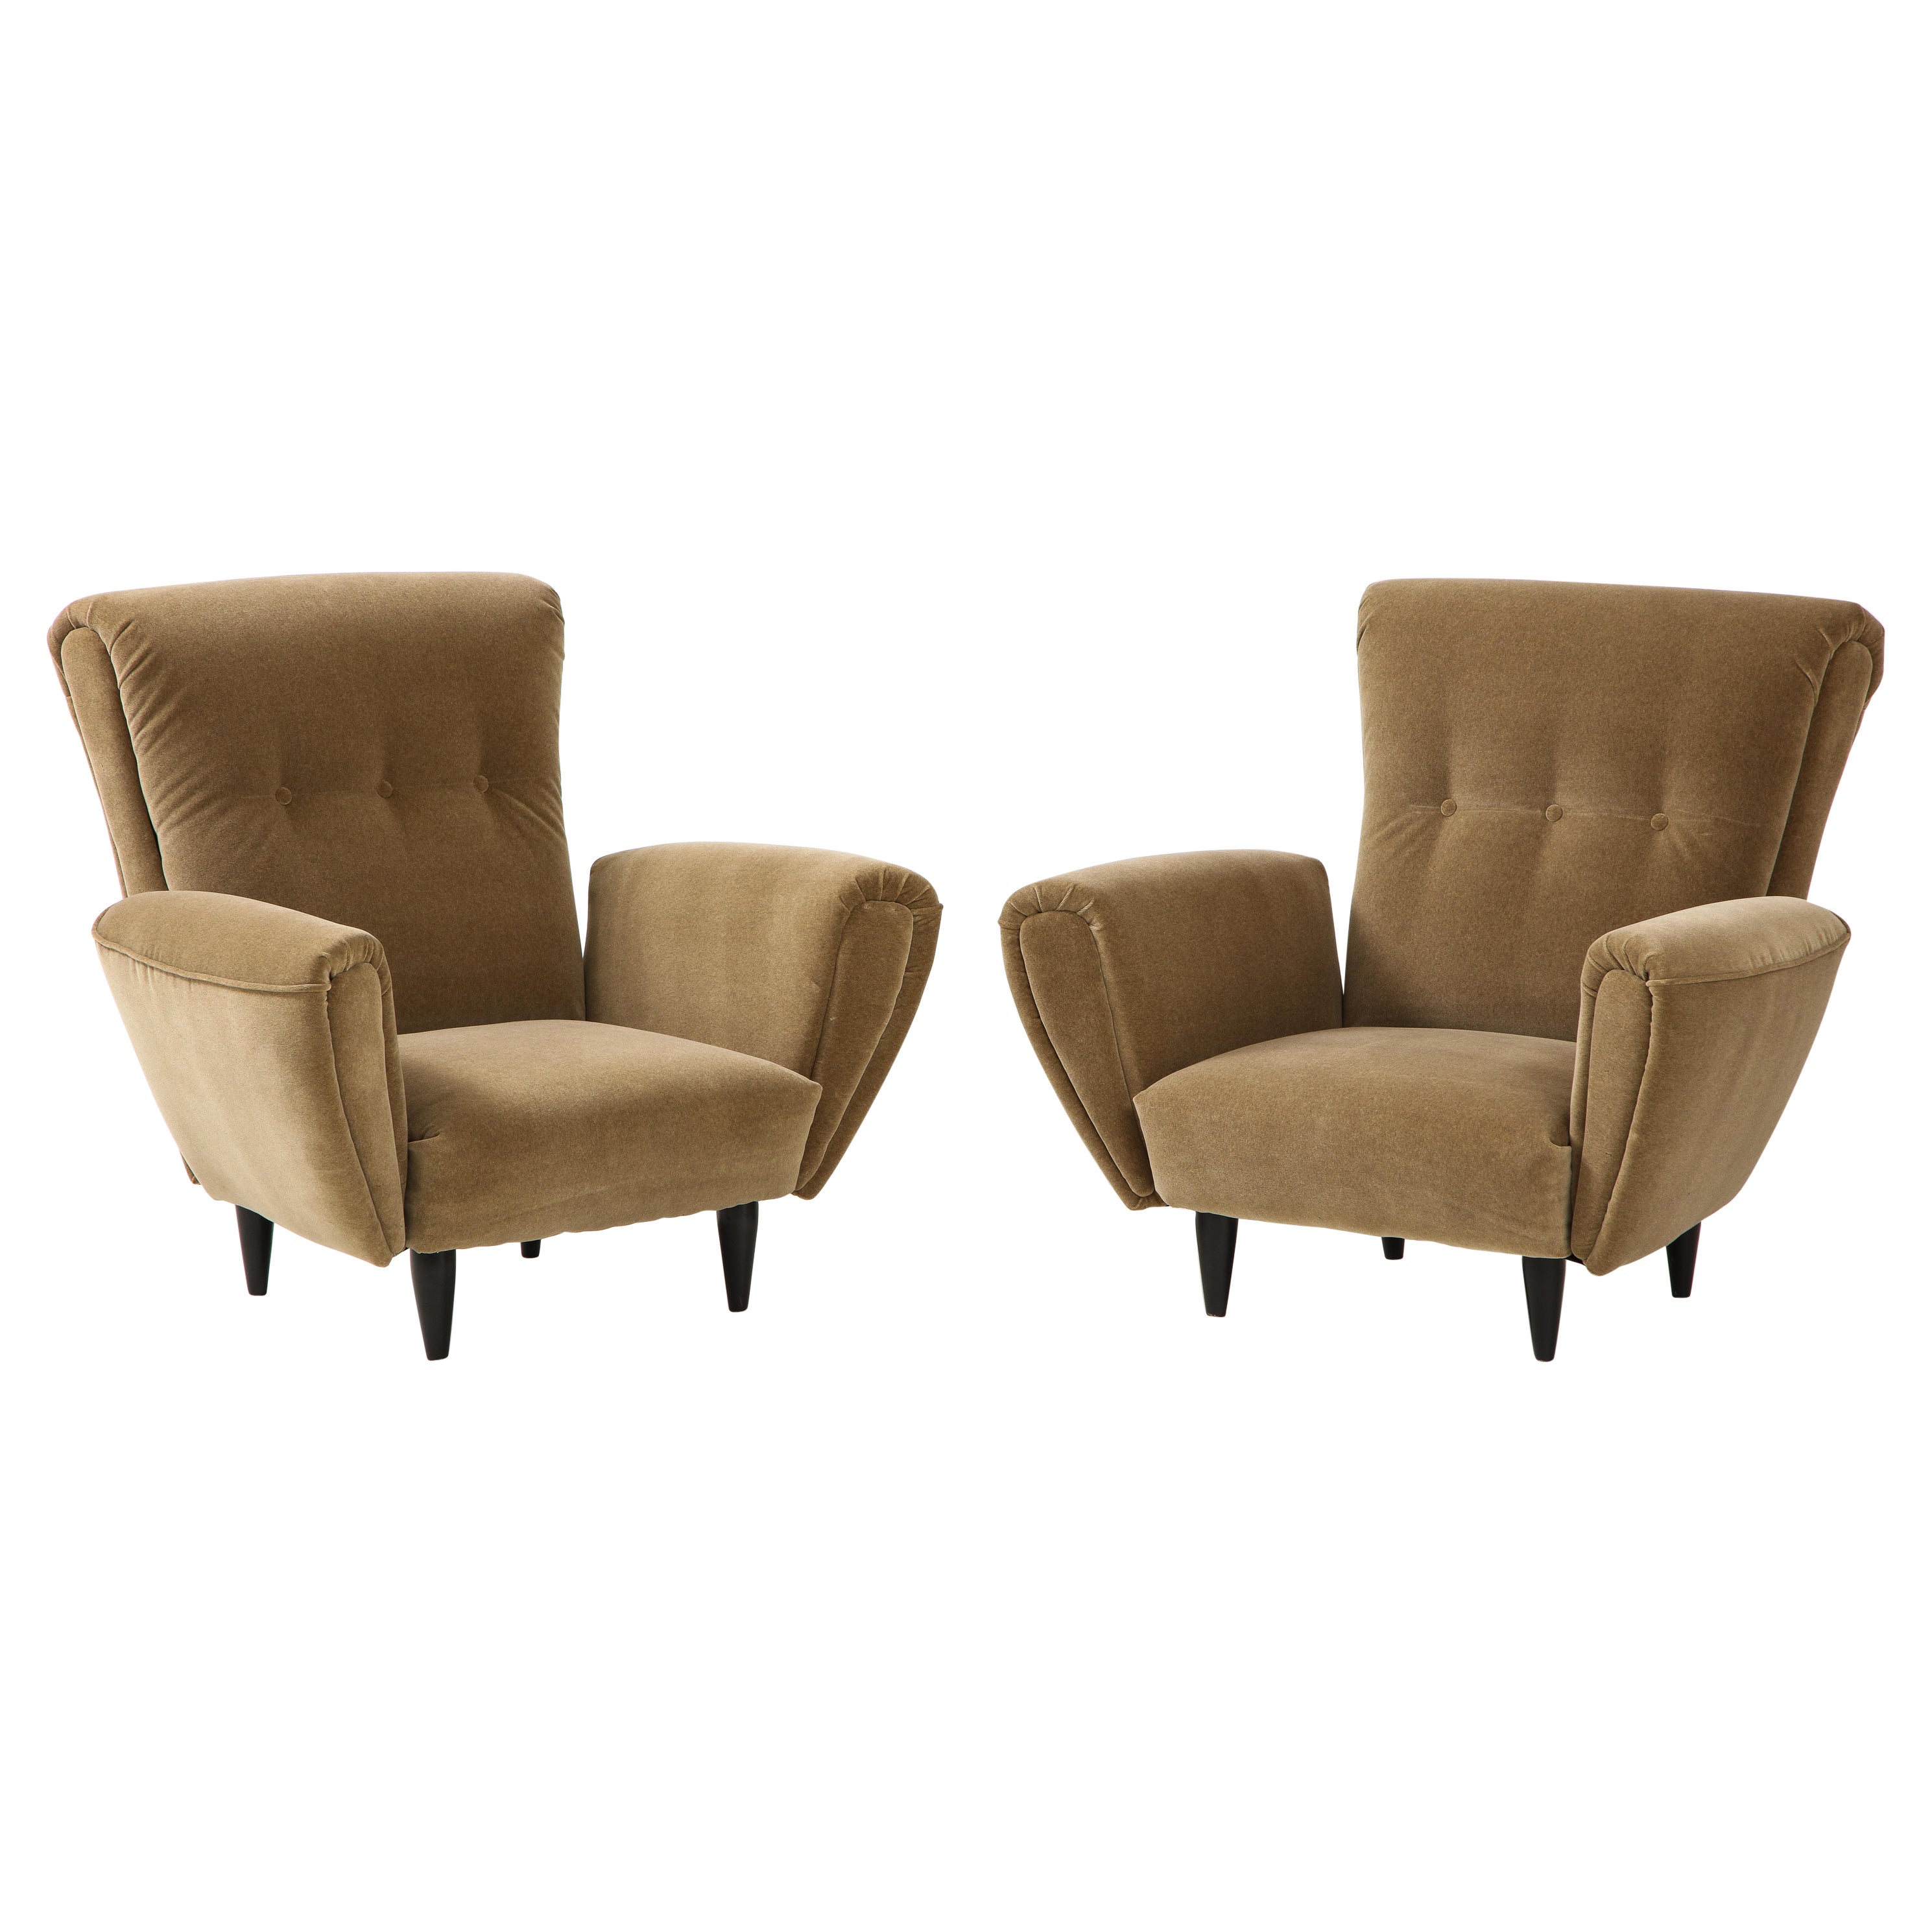 1940's Art Deco Italian Chairs